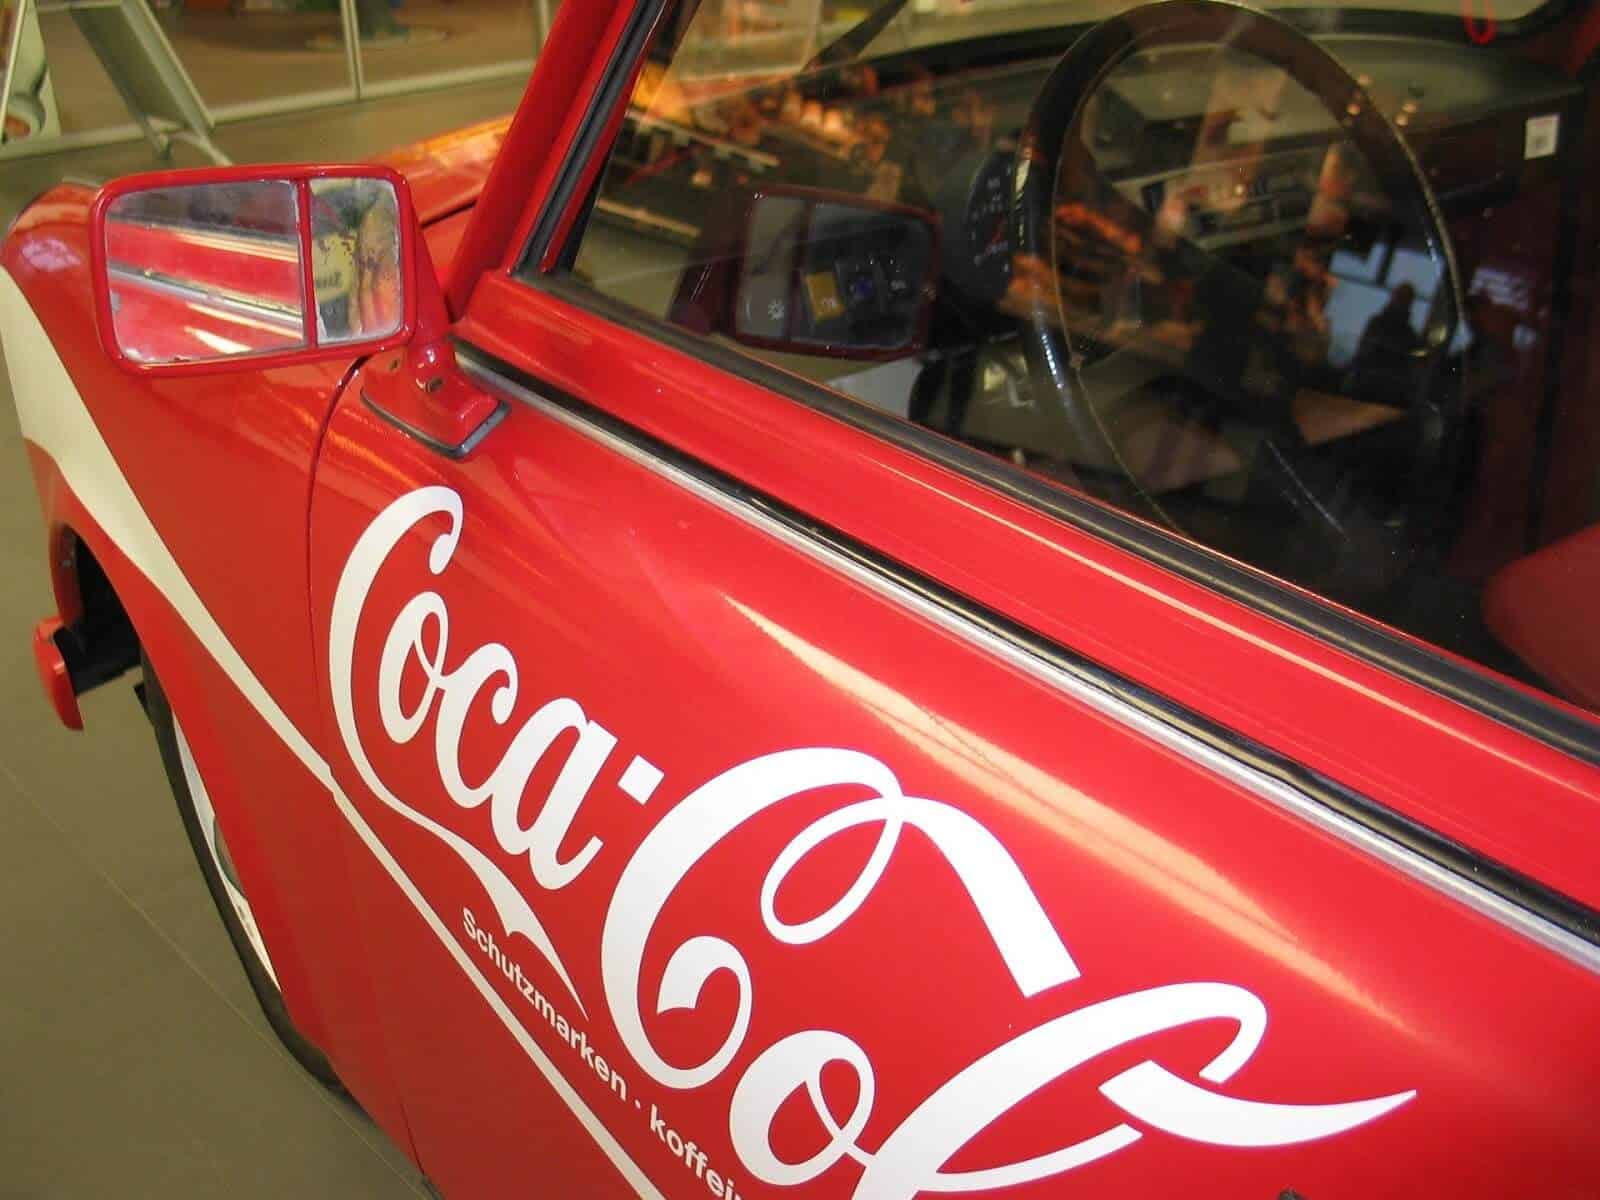 Car with Coca-Cola logo